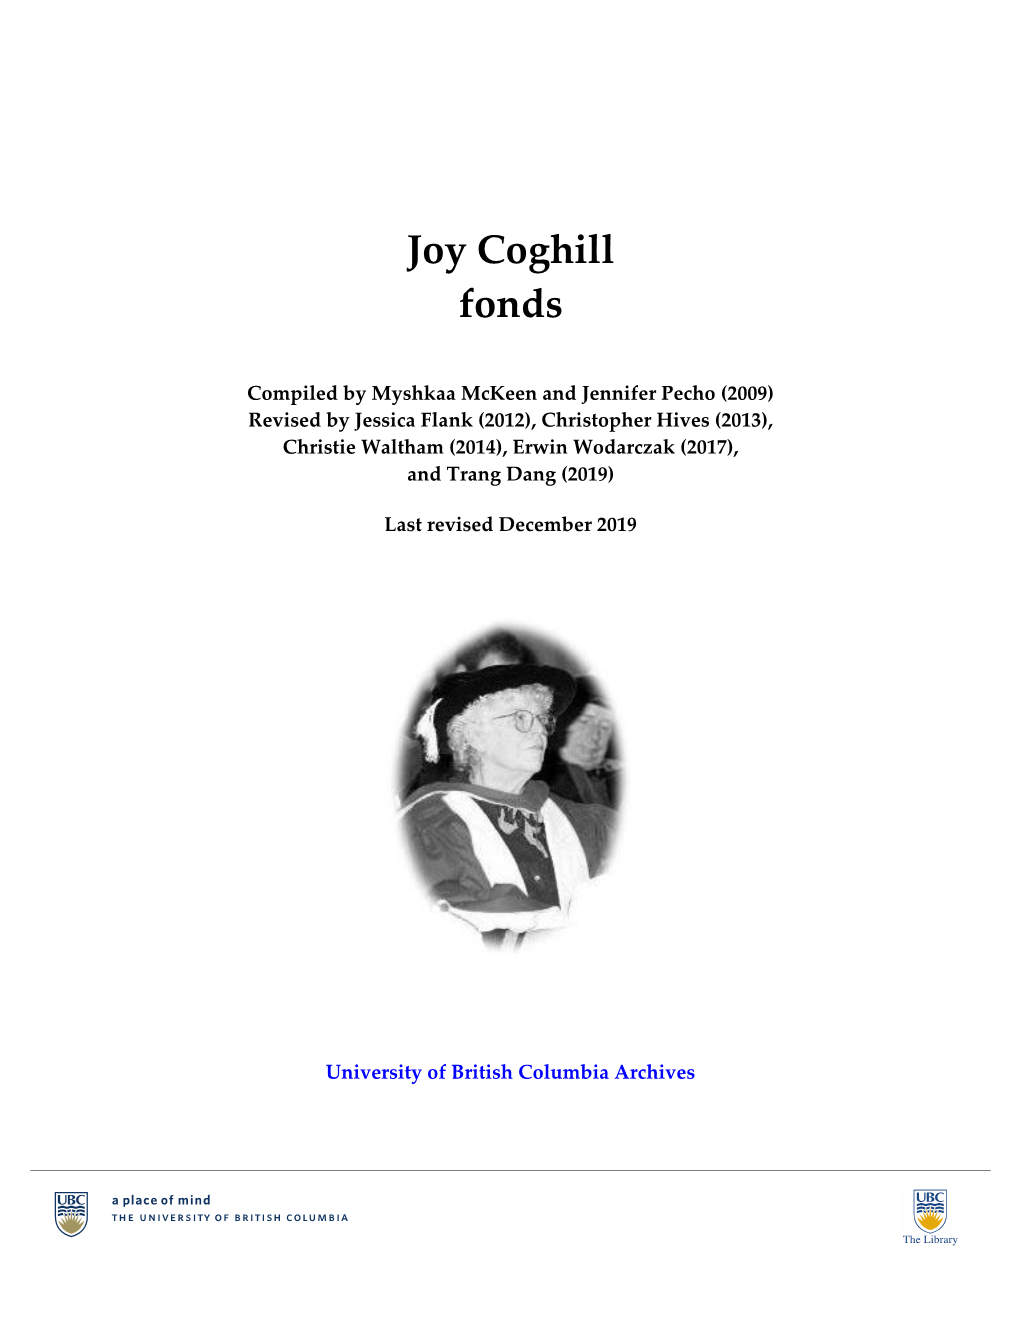 Joy Coghill Fonds